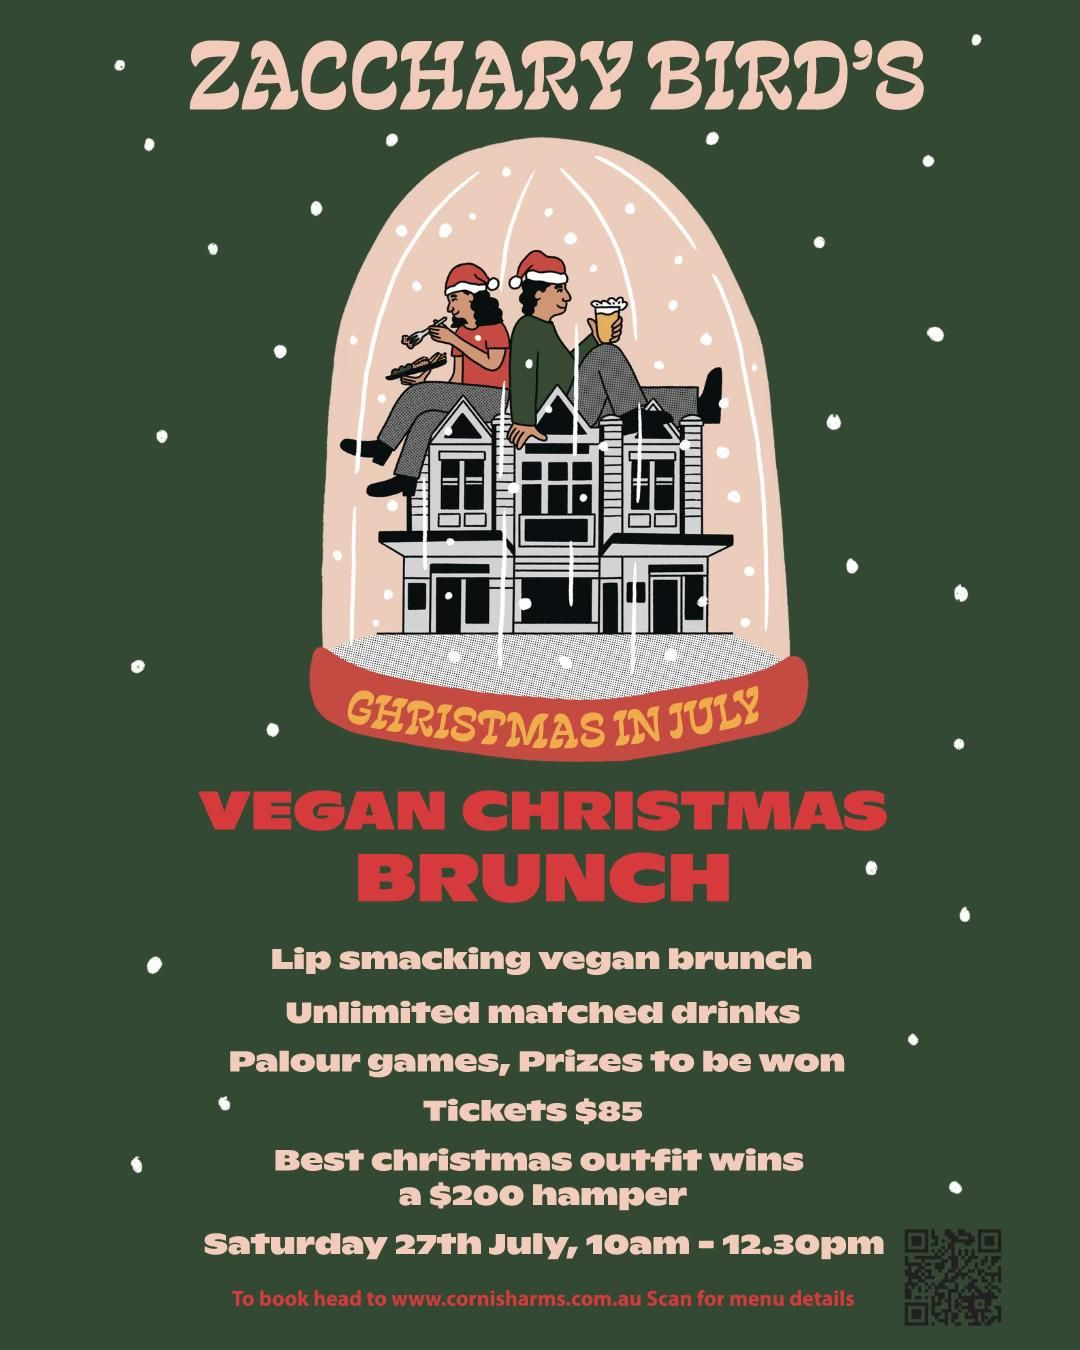 Zacchary Bird's Vegan Christmas in July Brunch